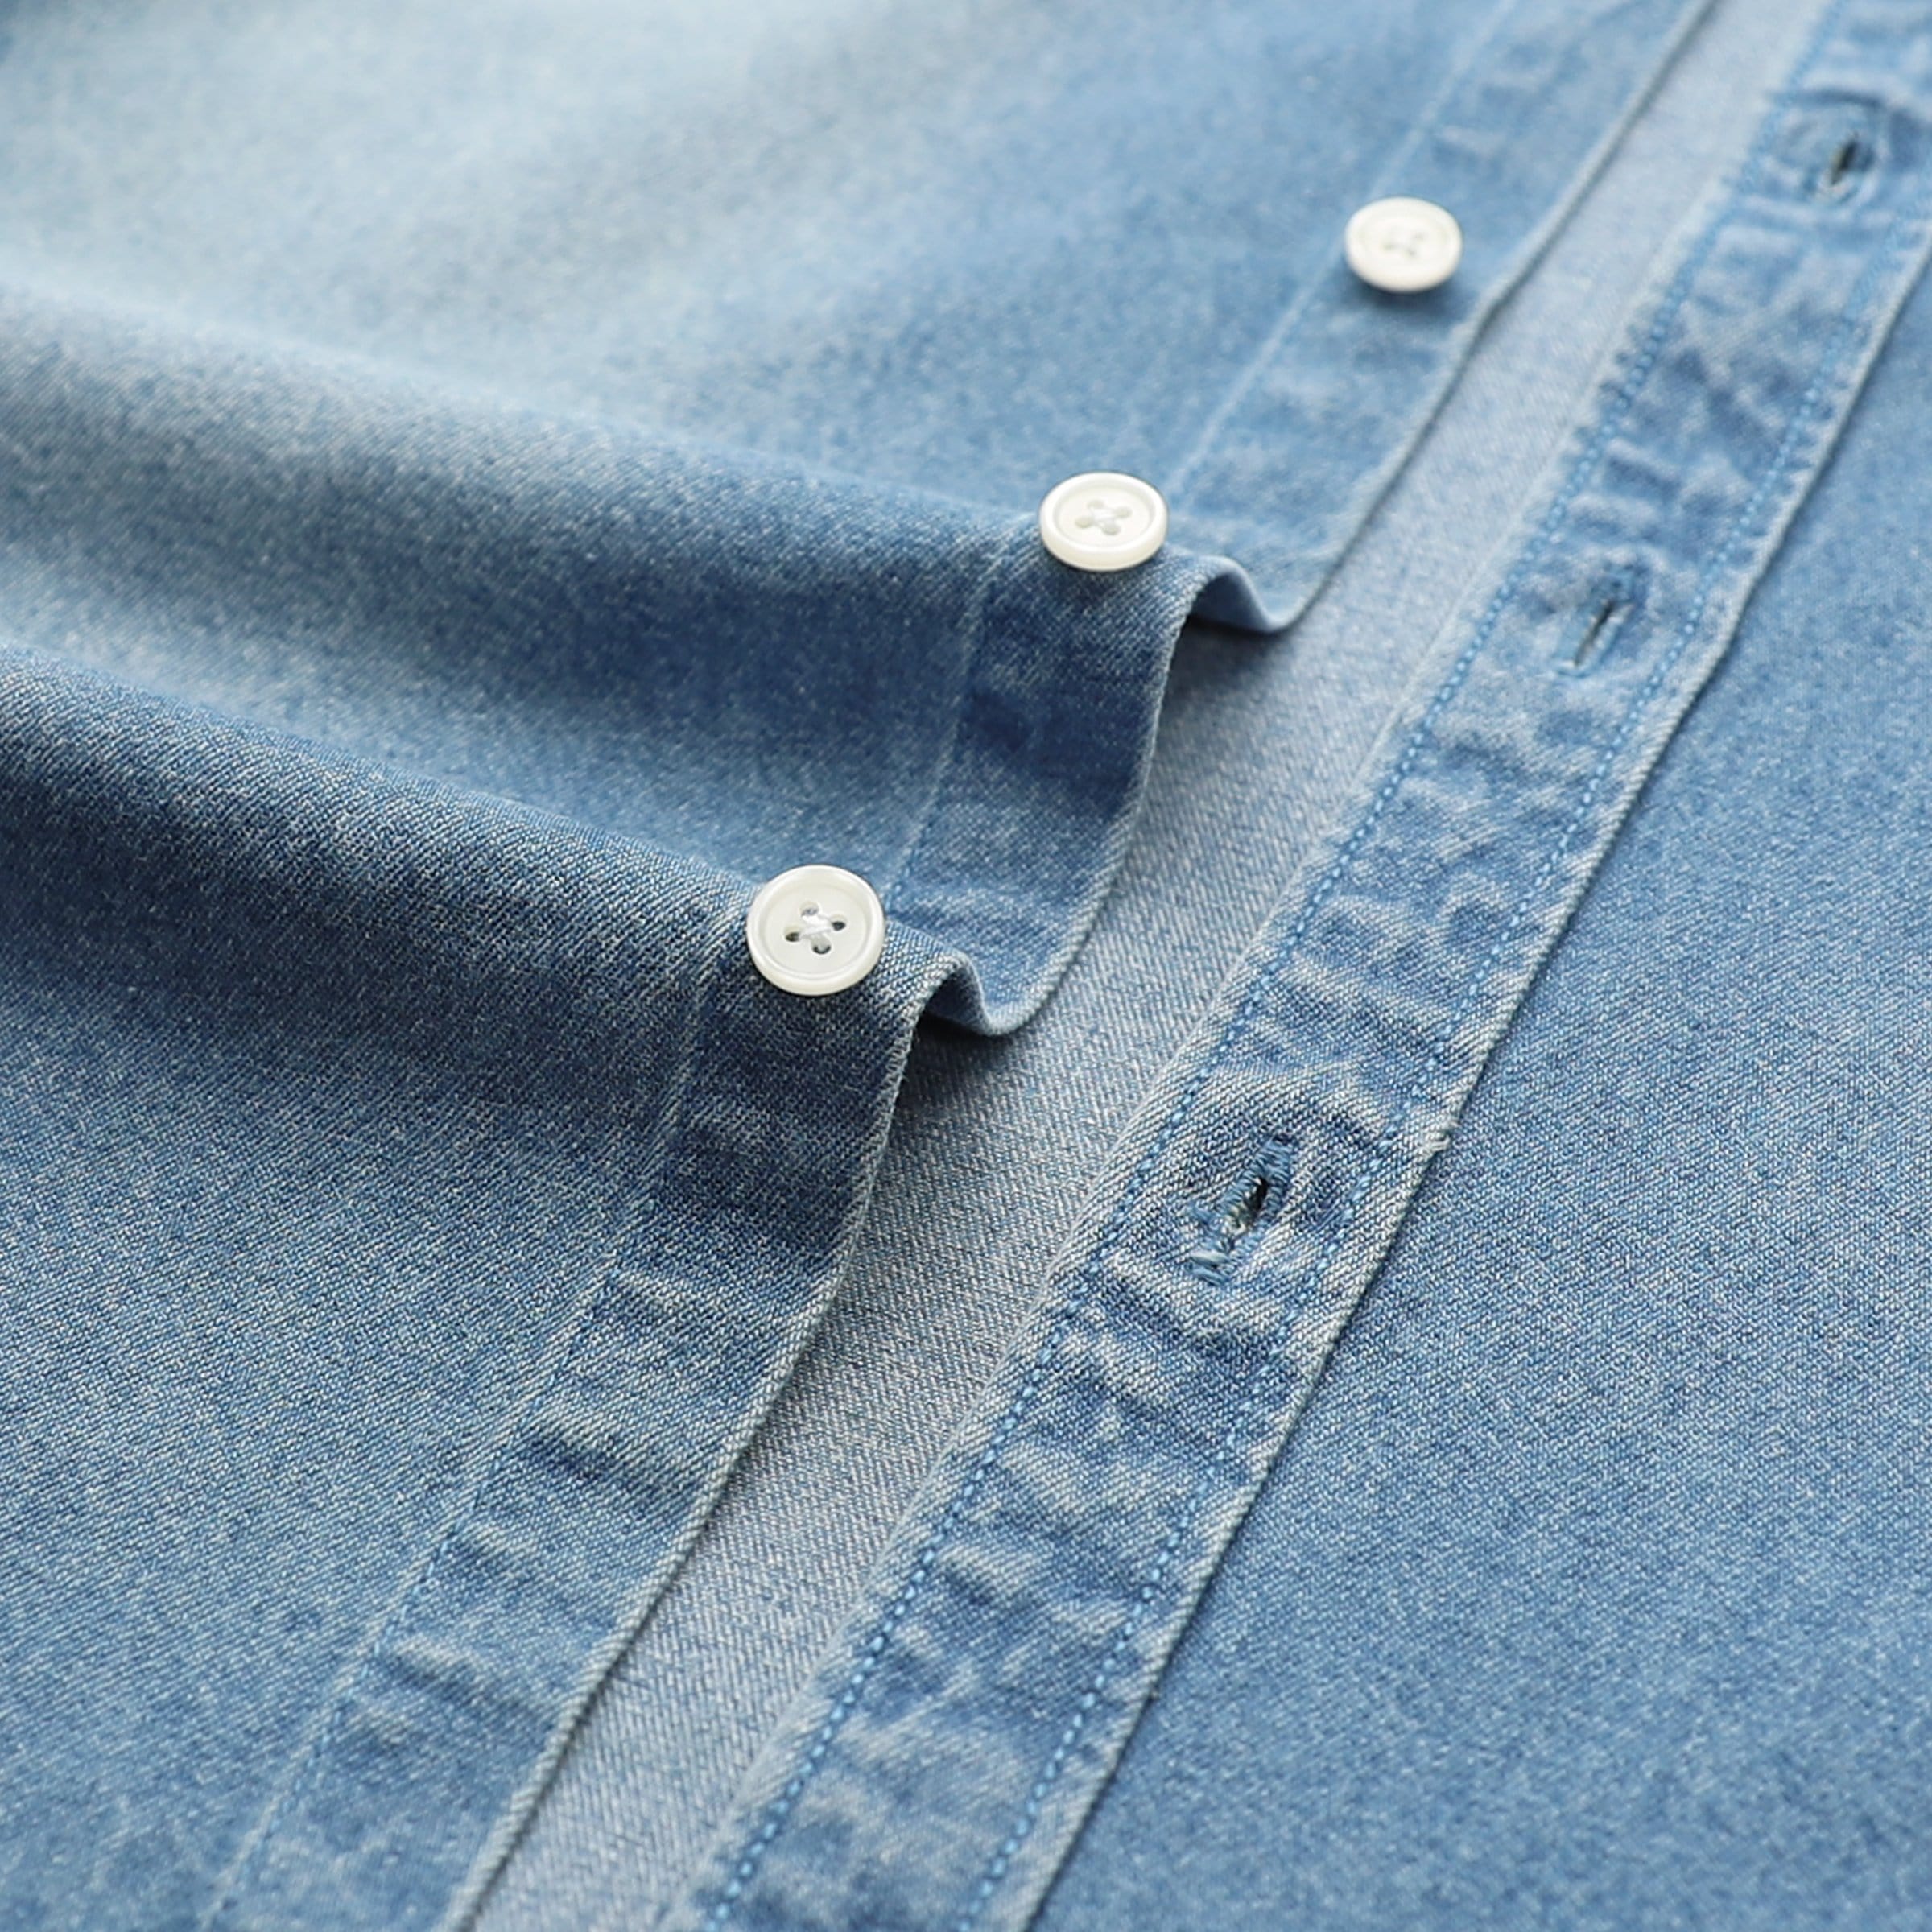 Men's cotton short-sleeved denim shirt #5502